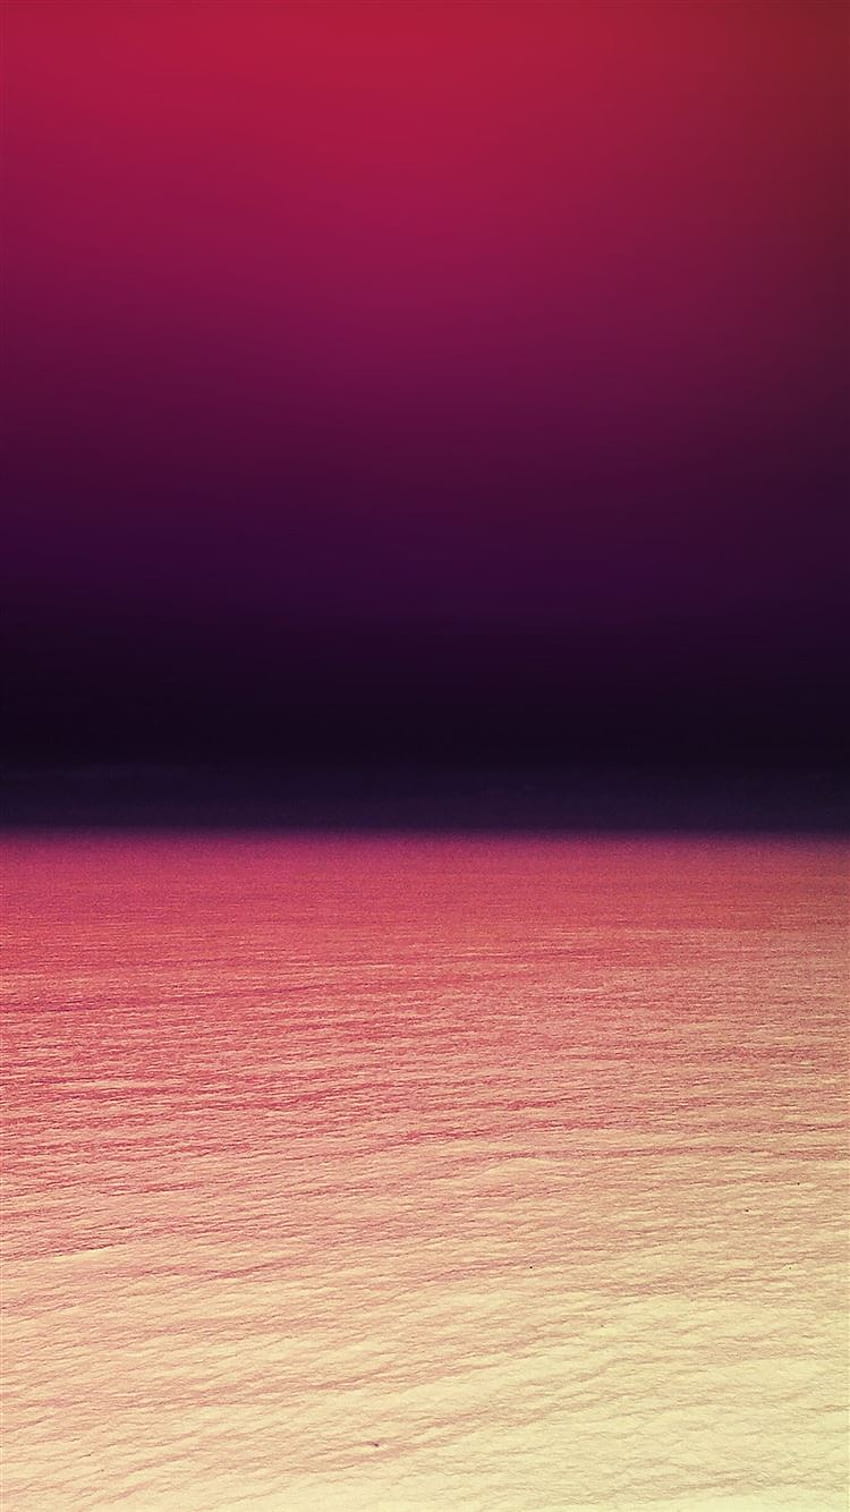 Calm sea purple red ocean water summer day iPhone 8 HD phone wallpaper